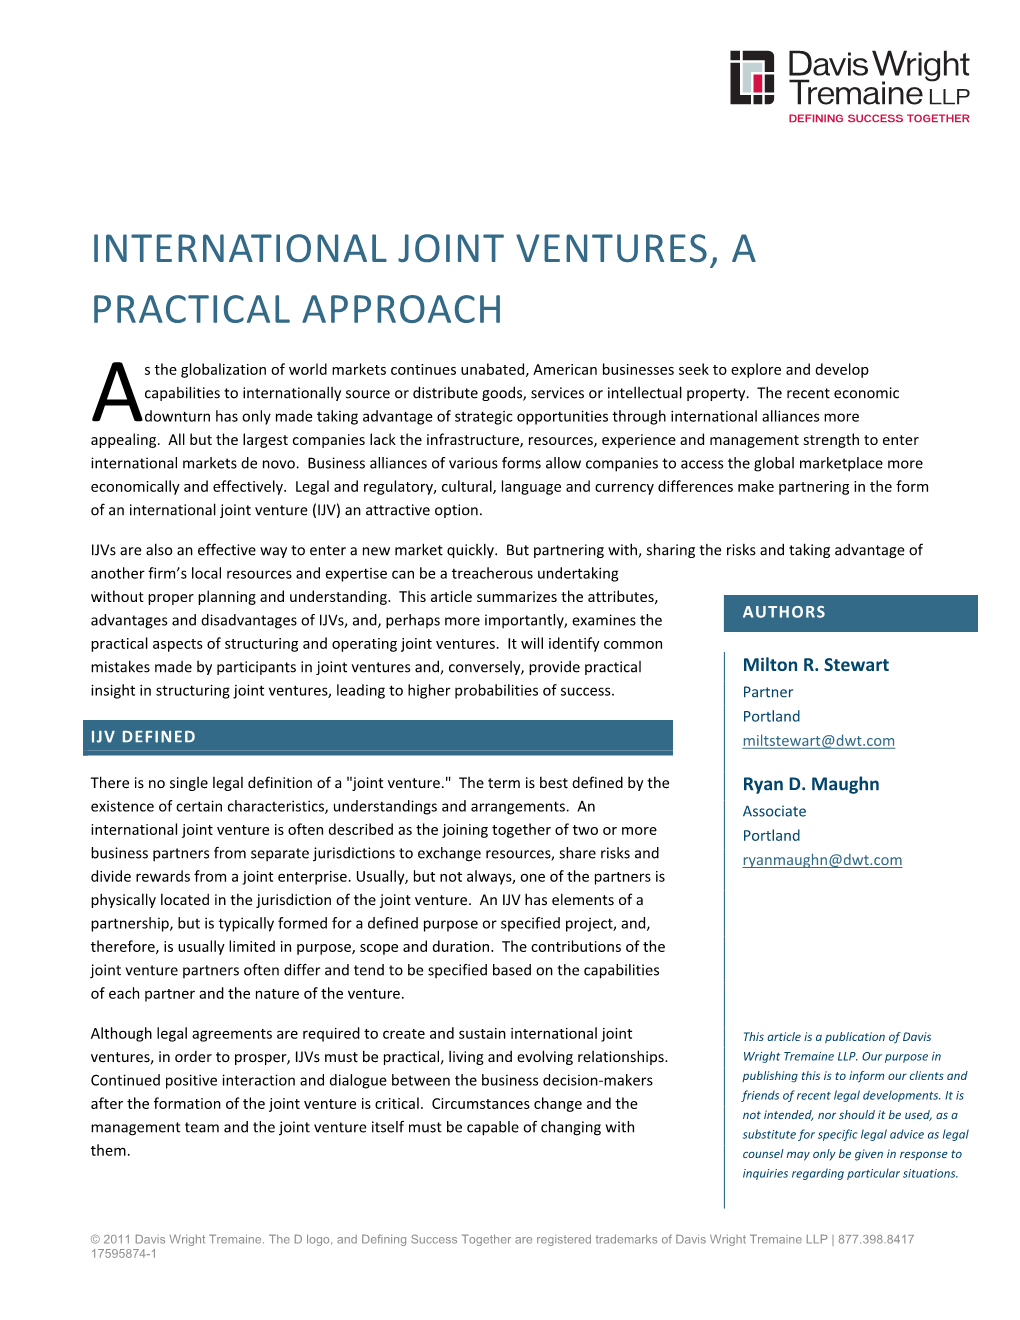 International Joint Ventures, a Practical Approach